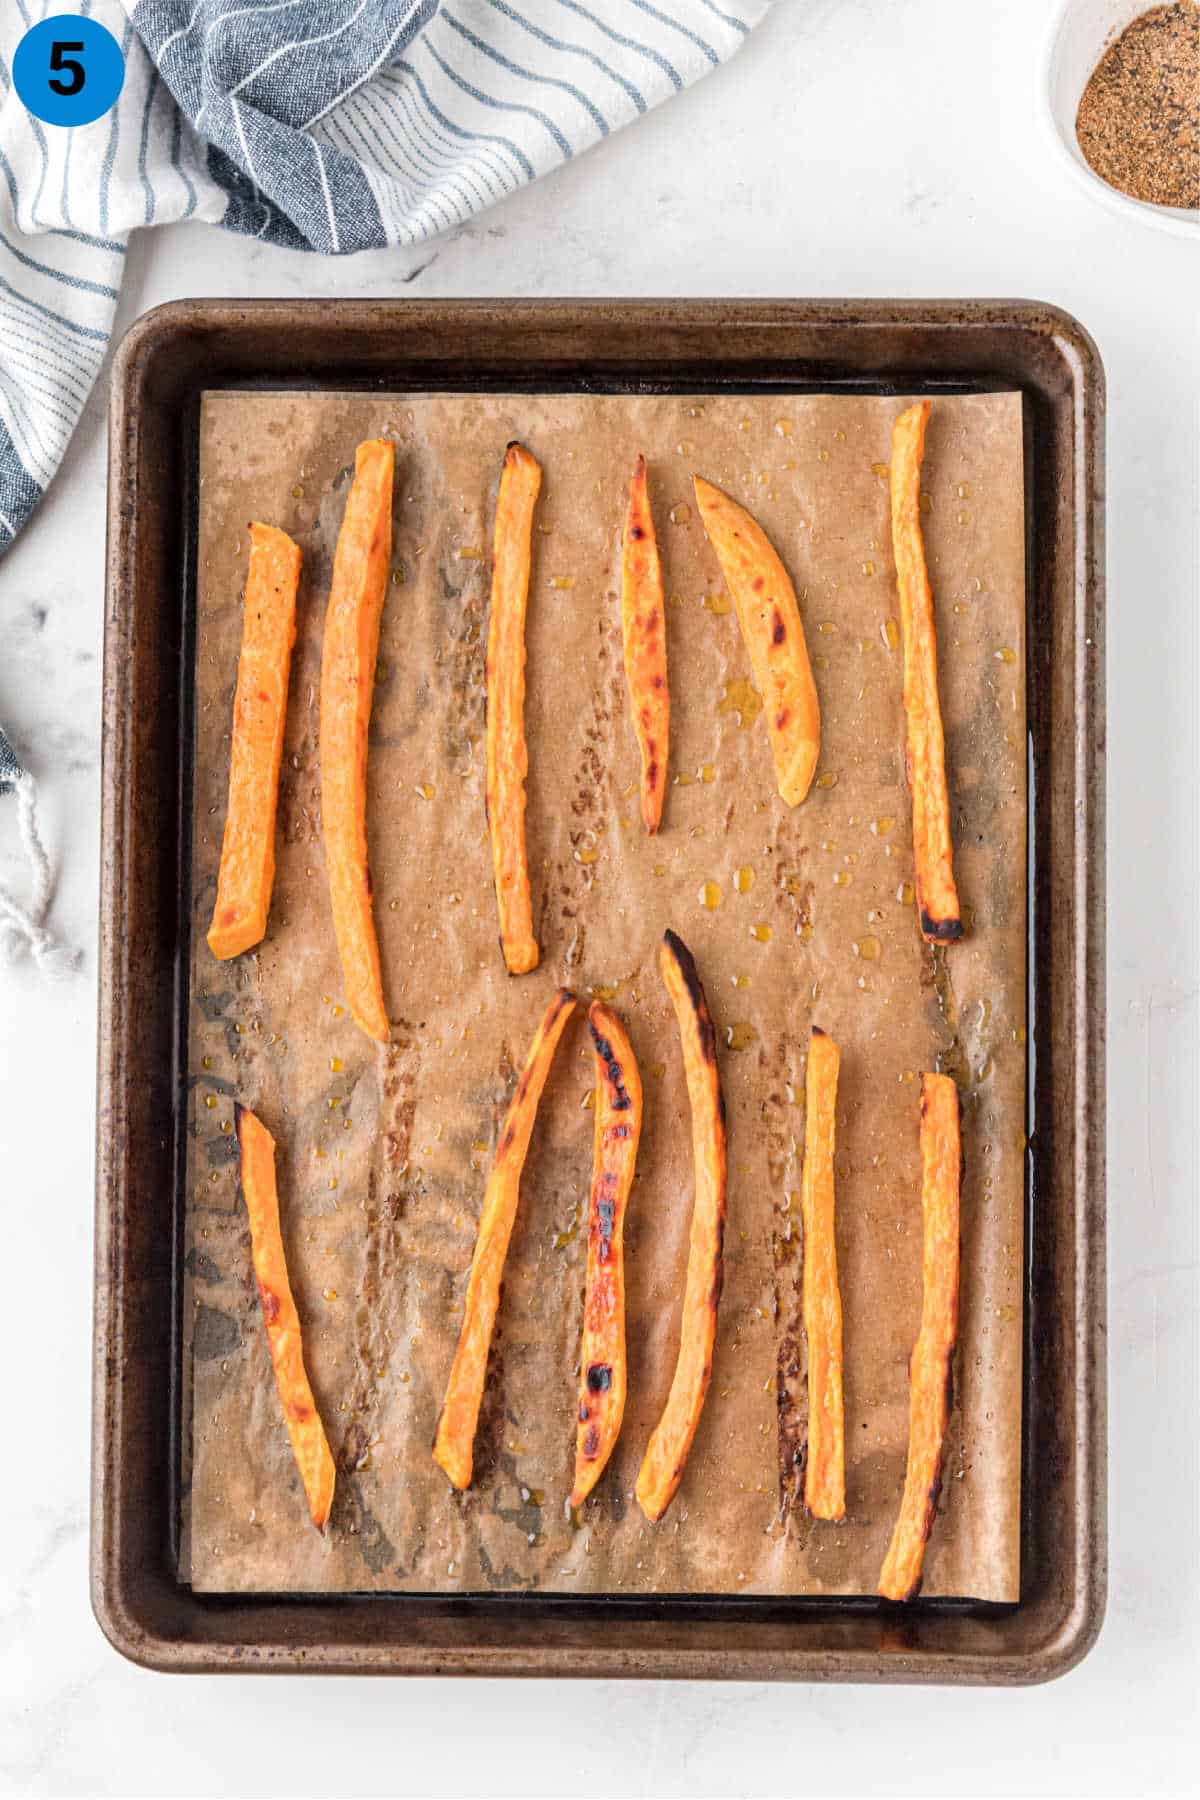 A baking sheet with crispy sweet potatoes.